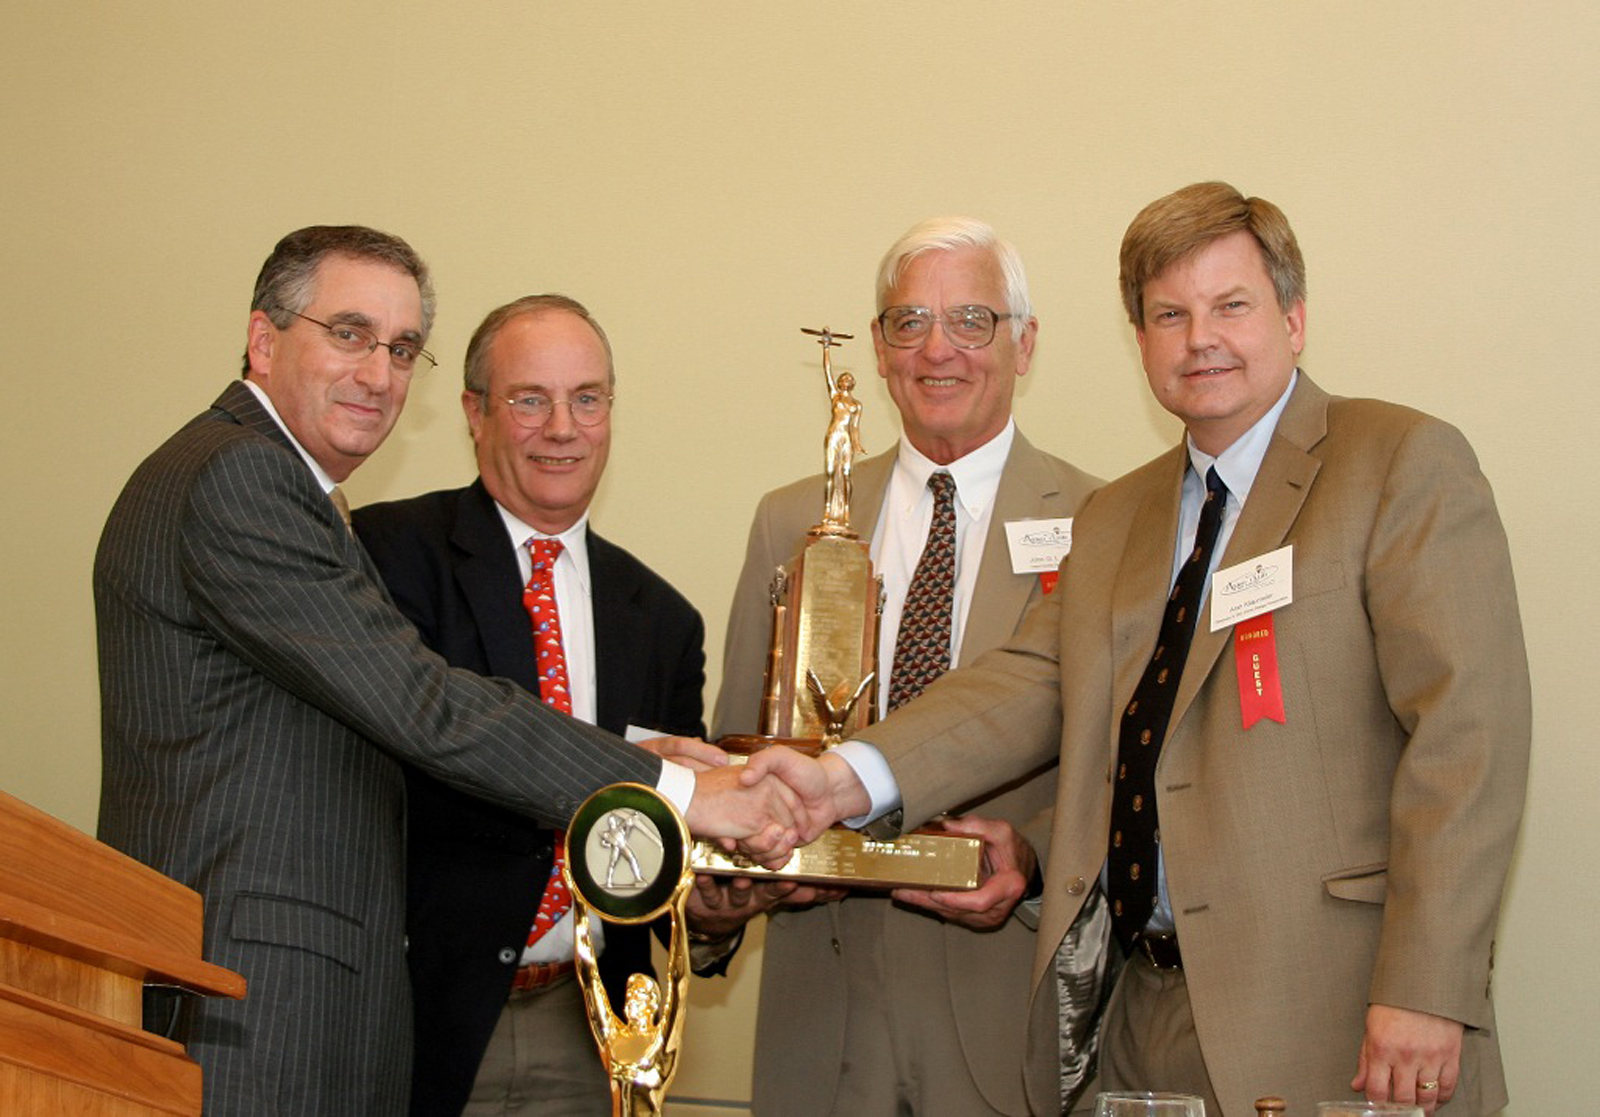 Klapmeier Brothers Named 2007 Recipients of Godfrey L. Cabot Award